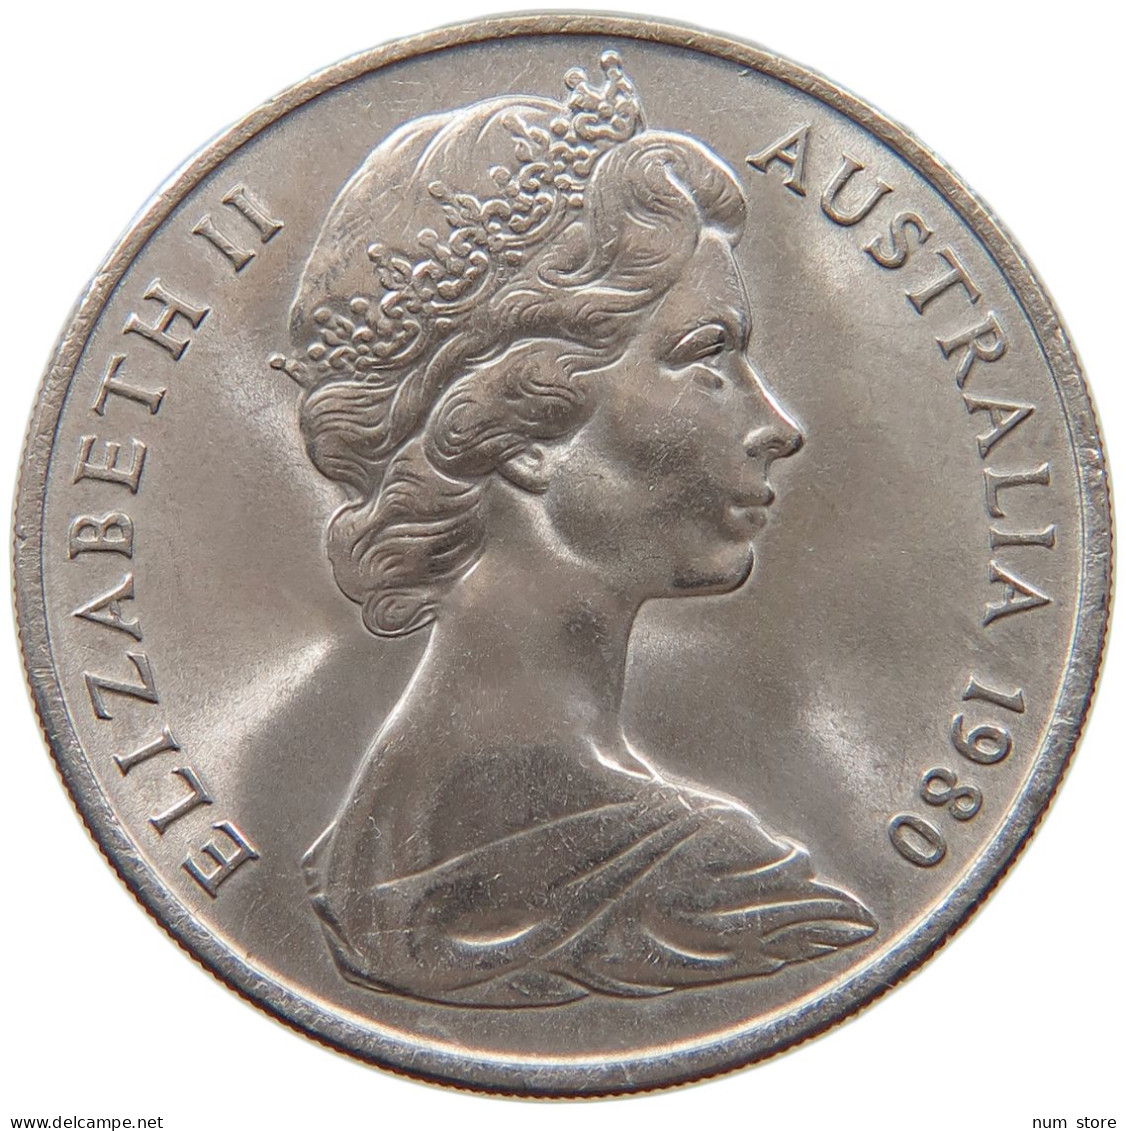 AUSTRALIA 20 CENTS 1980 ELIZABETH II. (1952-2022) #MA 073161 - 20 Cents